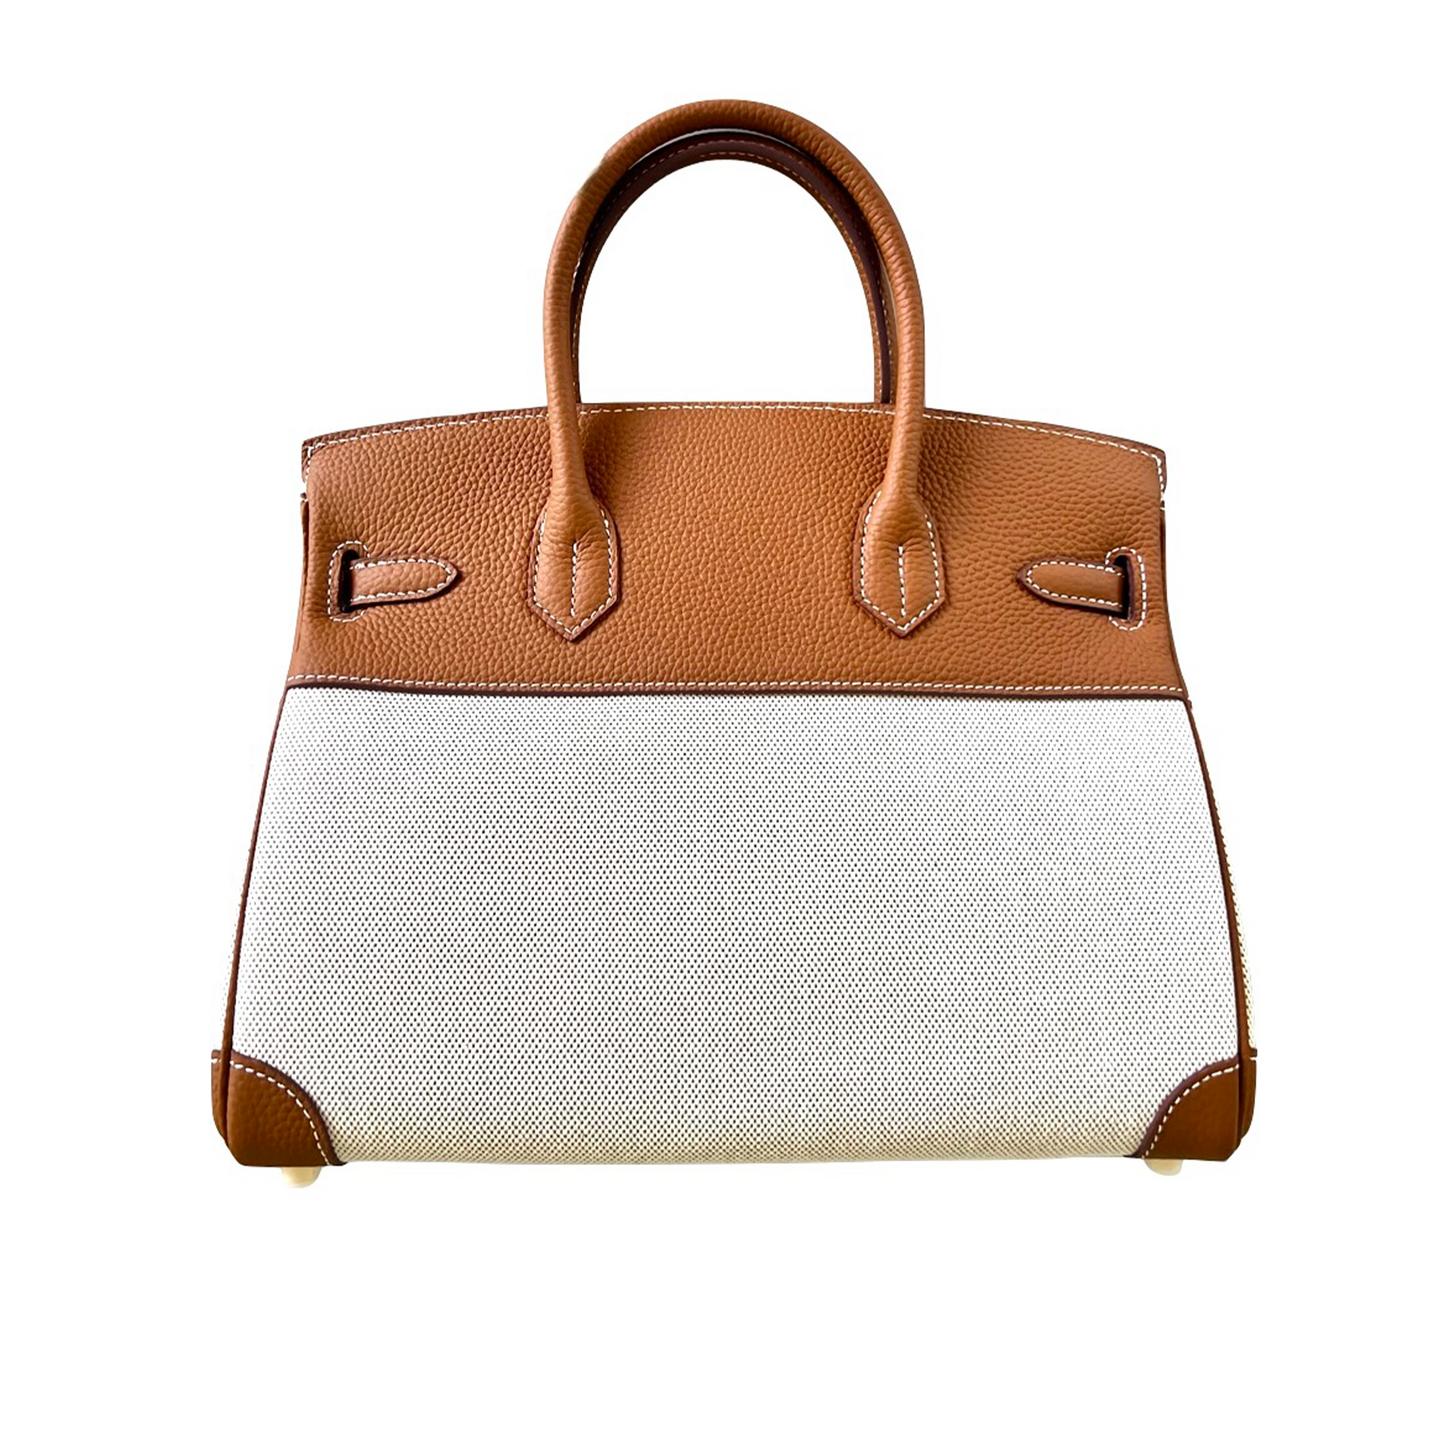 Duchess Handbag in Linen and Cognac Leather